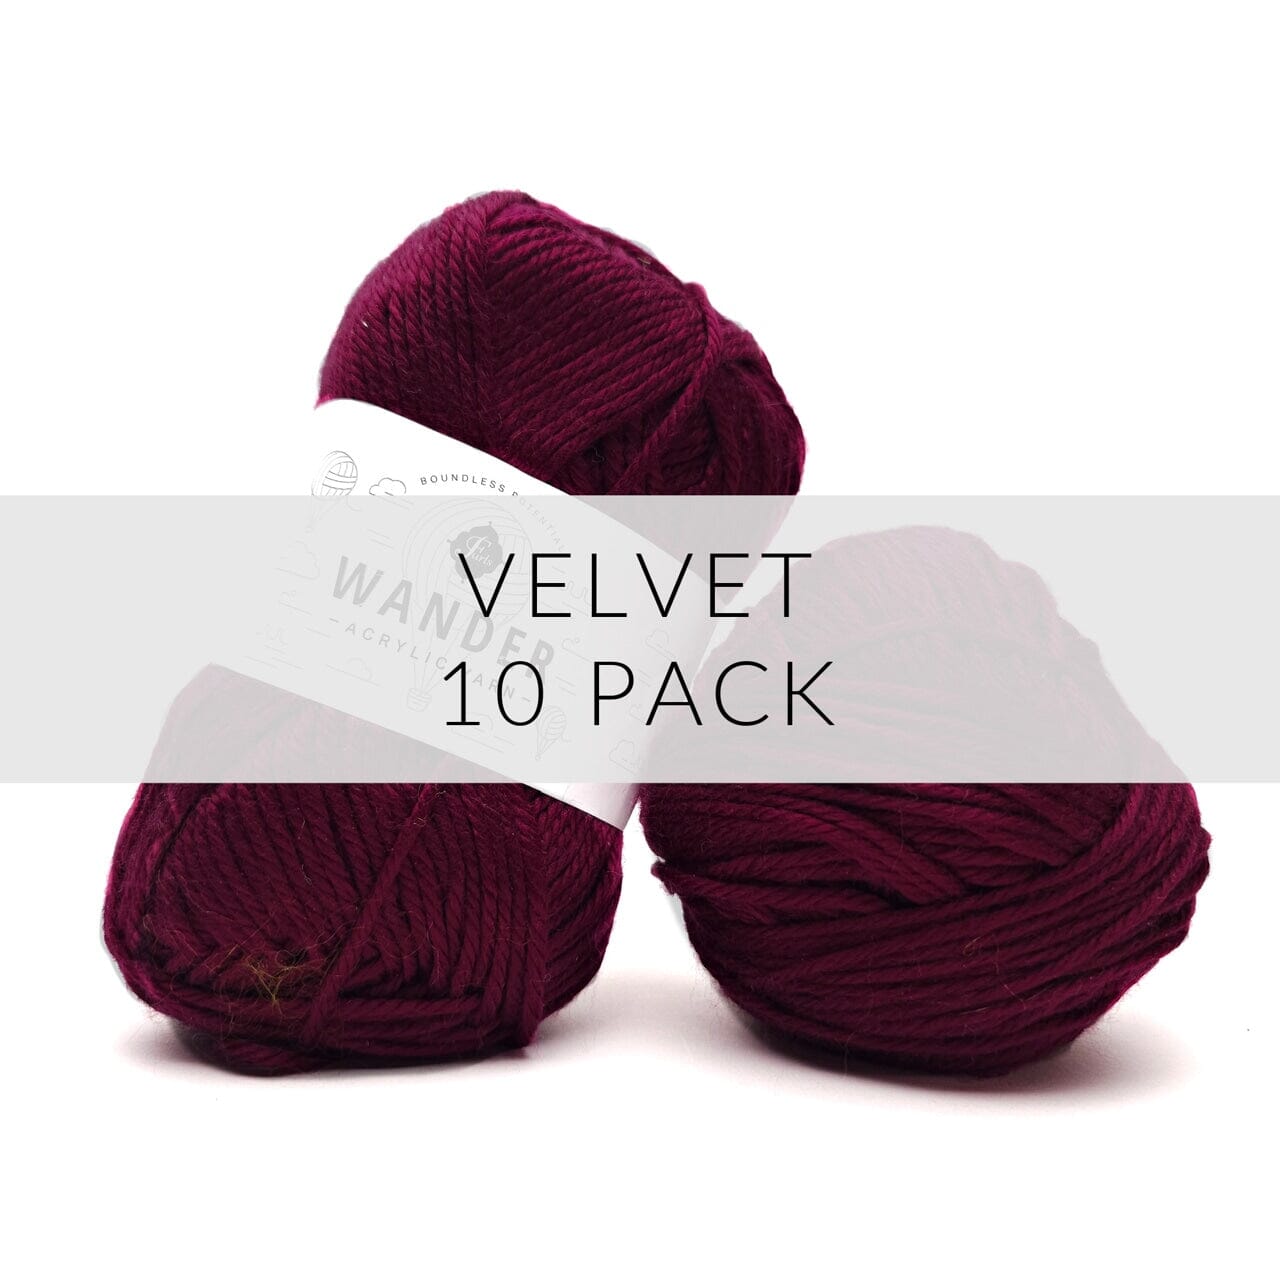 10 Pack Wander Acrylic Yarn Yarn FurlsCrochet Velvet 